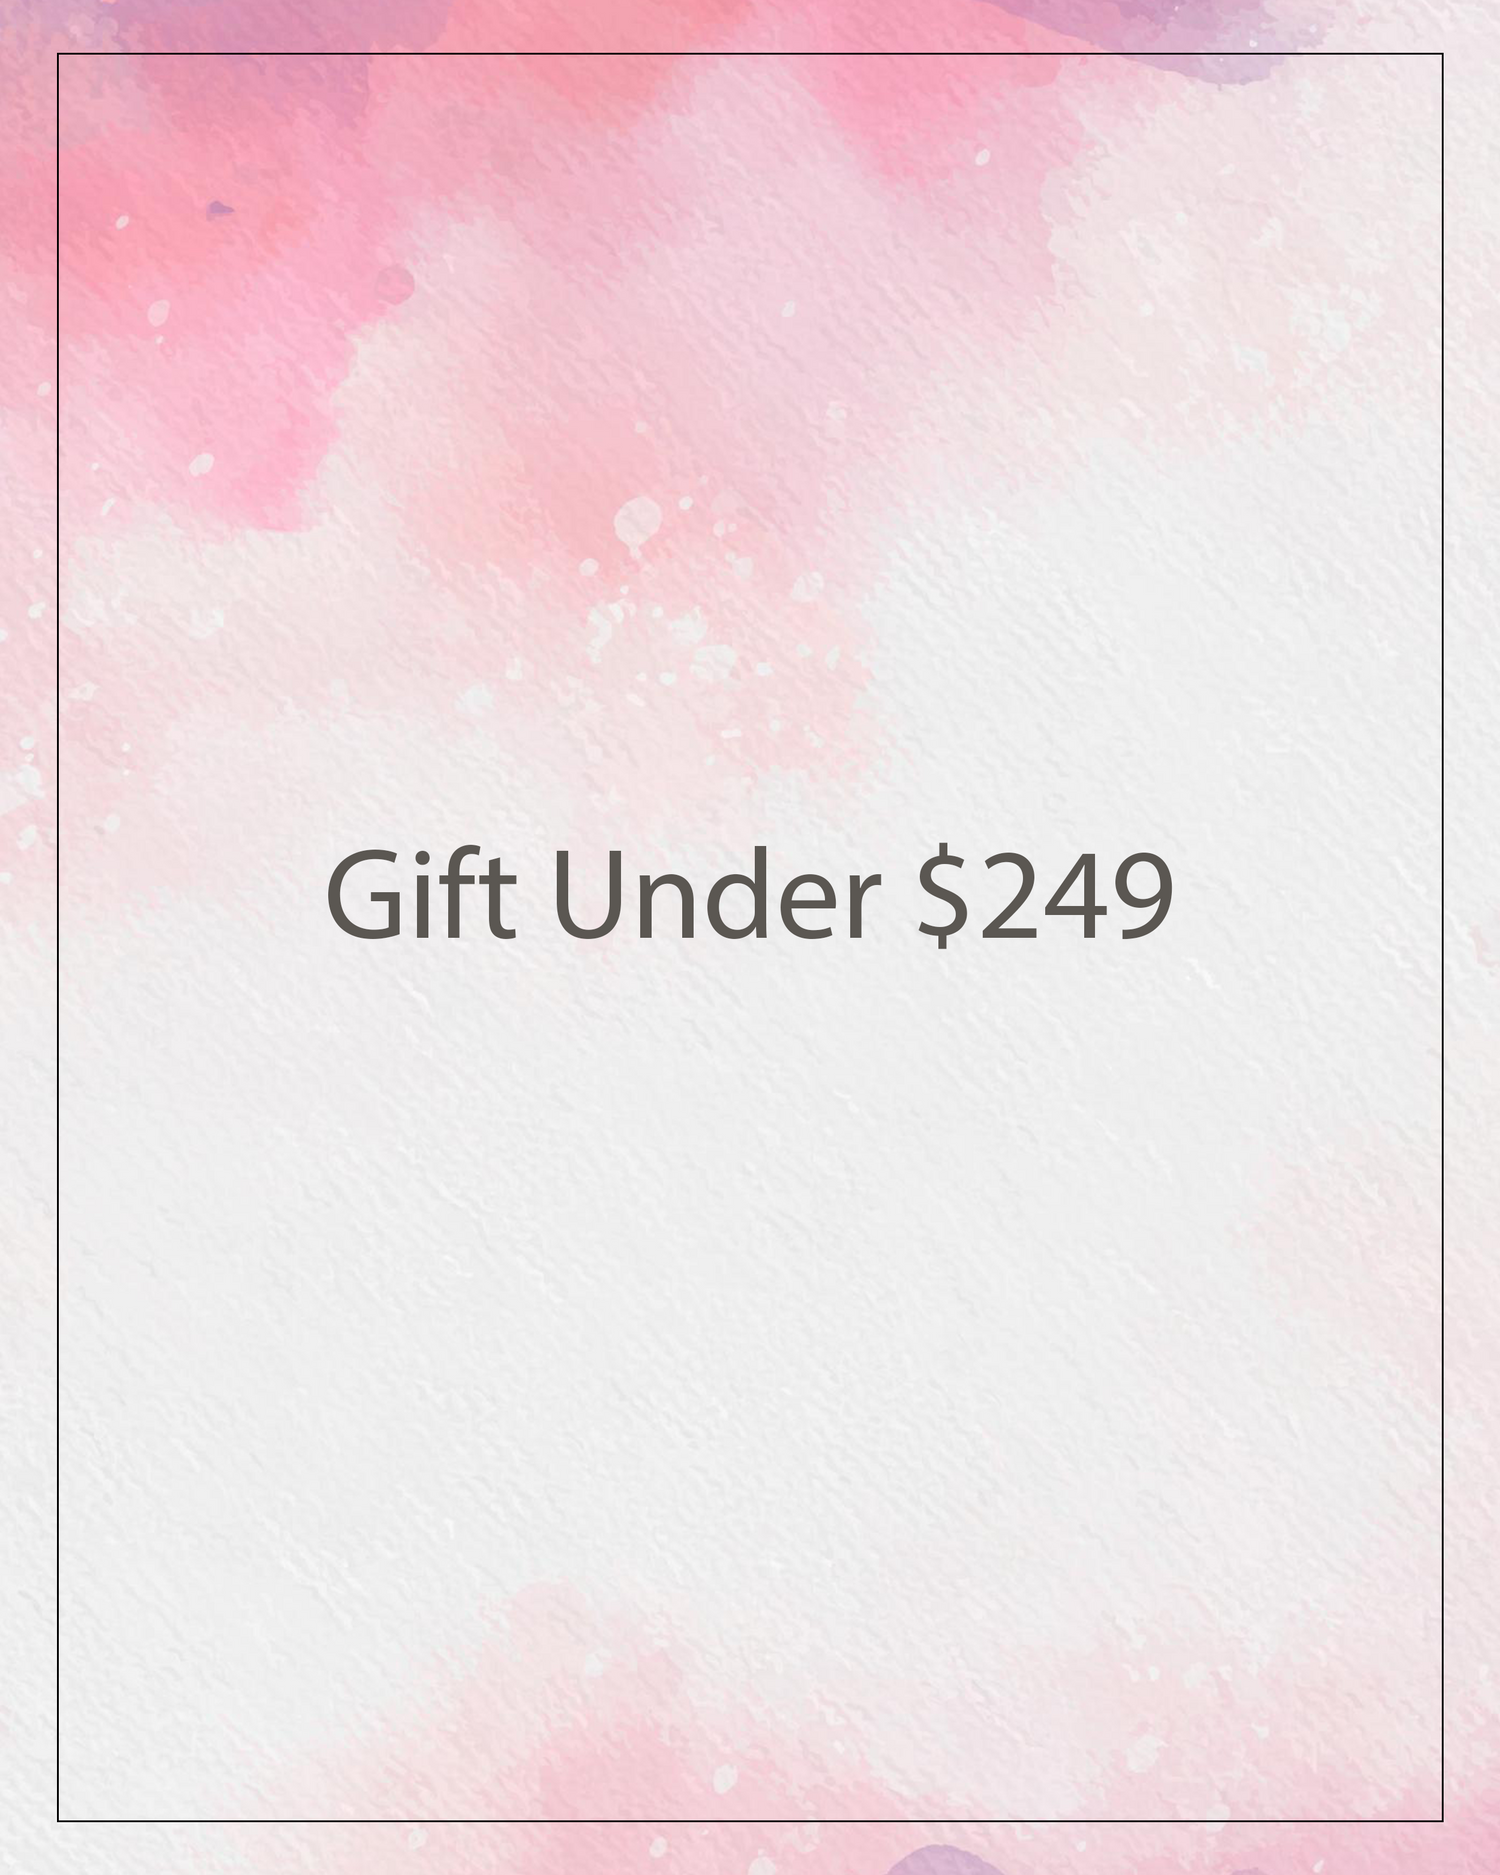 Gifts Under $249